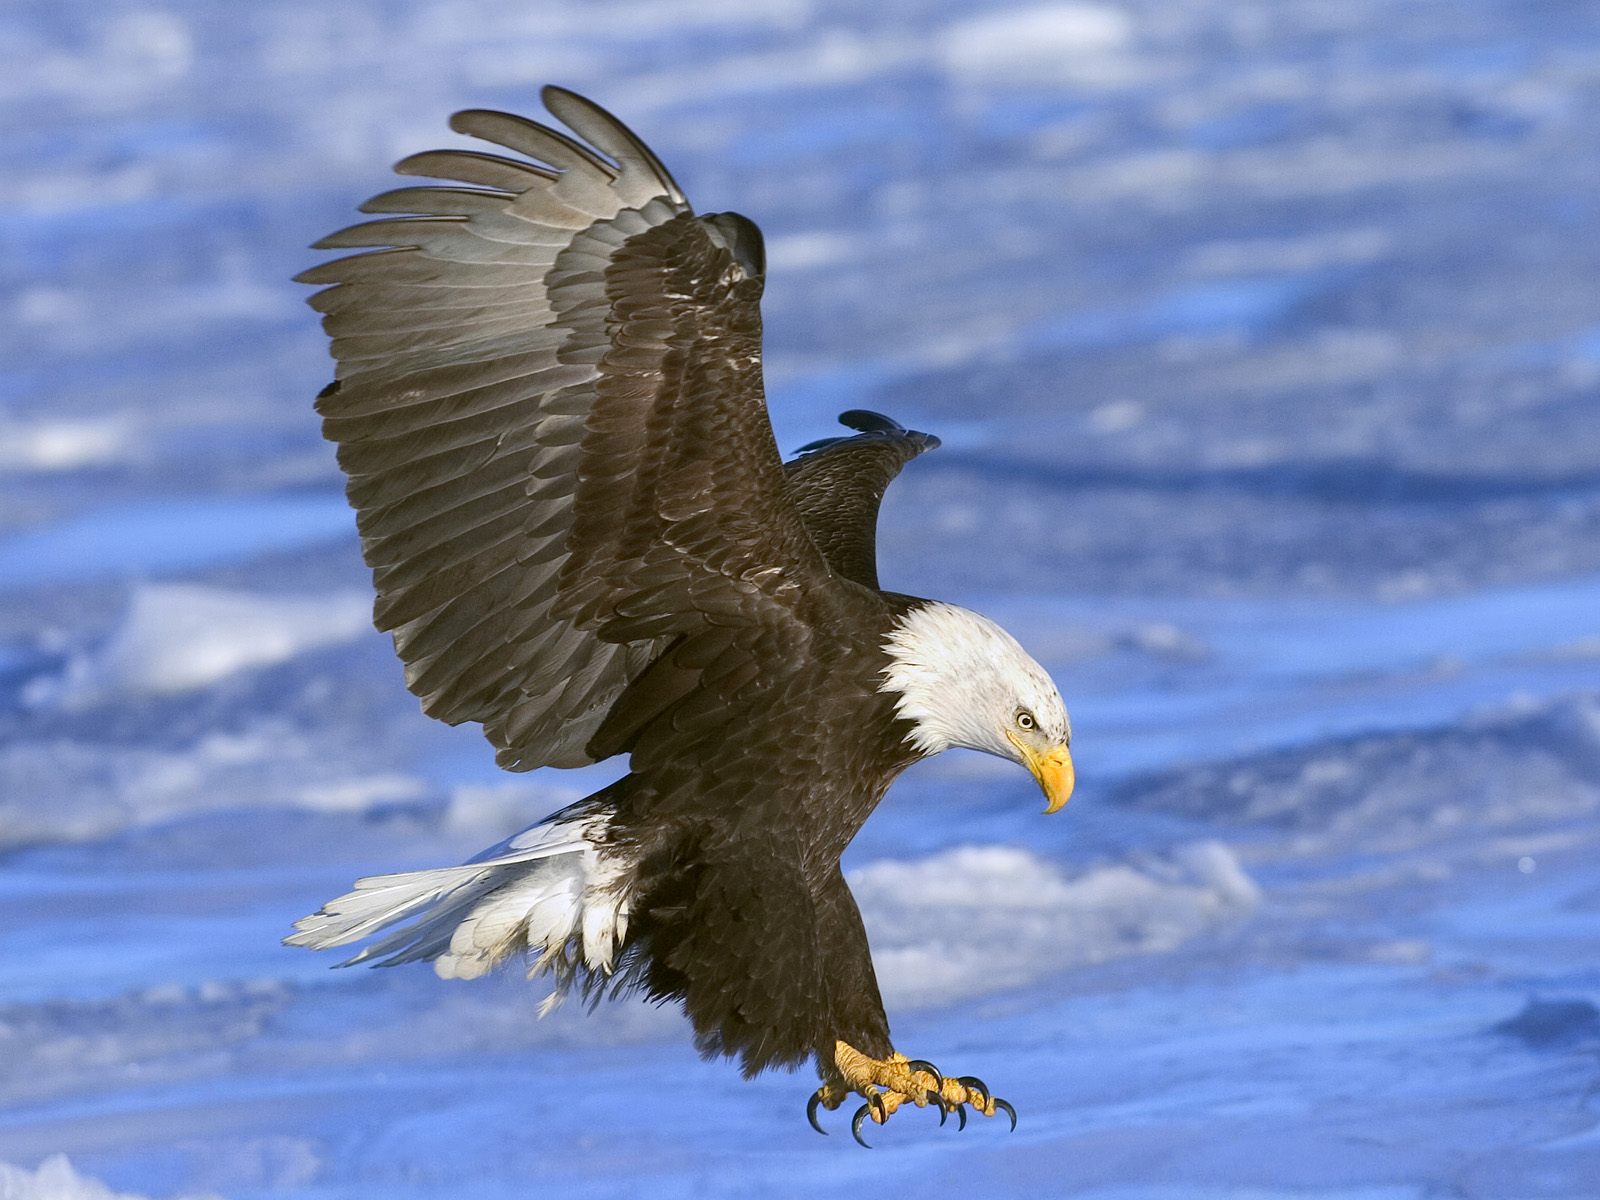 http://3.bp.blogspot.com/-92jEpuvoHl8/ToQlob_kpkI/AAAAAAAABYU/RHg7CFr3KG8/s1600/Bald+Eagle+in+Flight%252C+Alaska.jpg